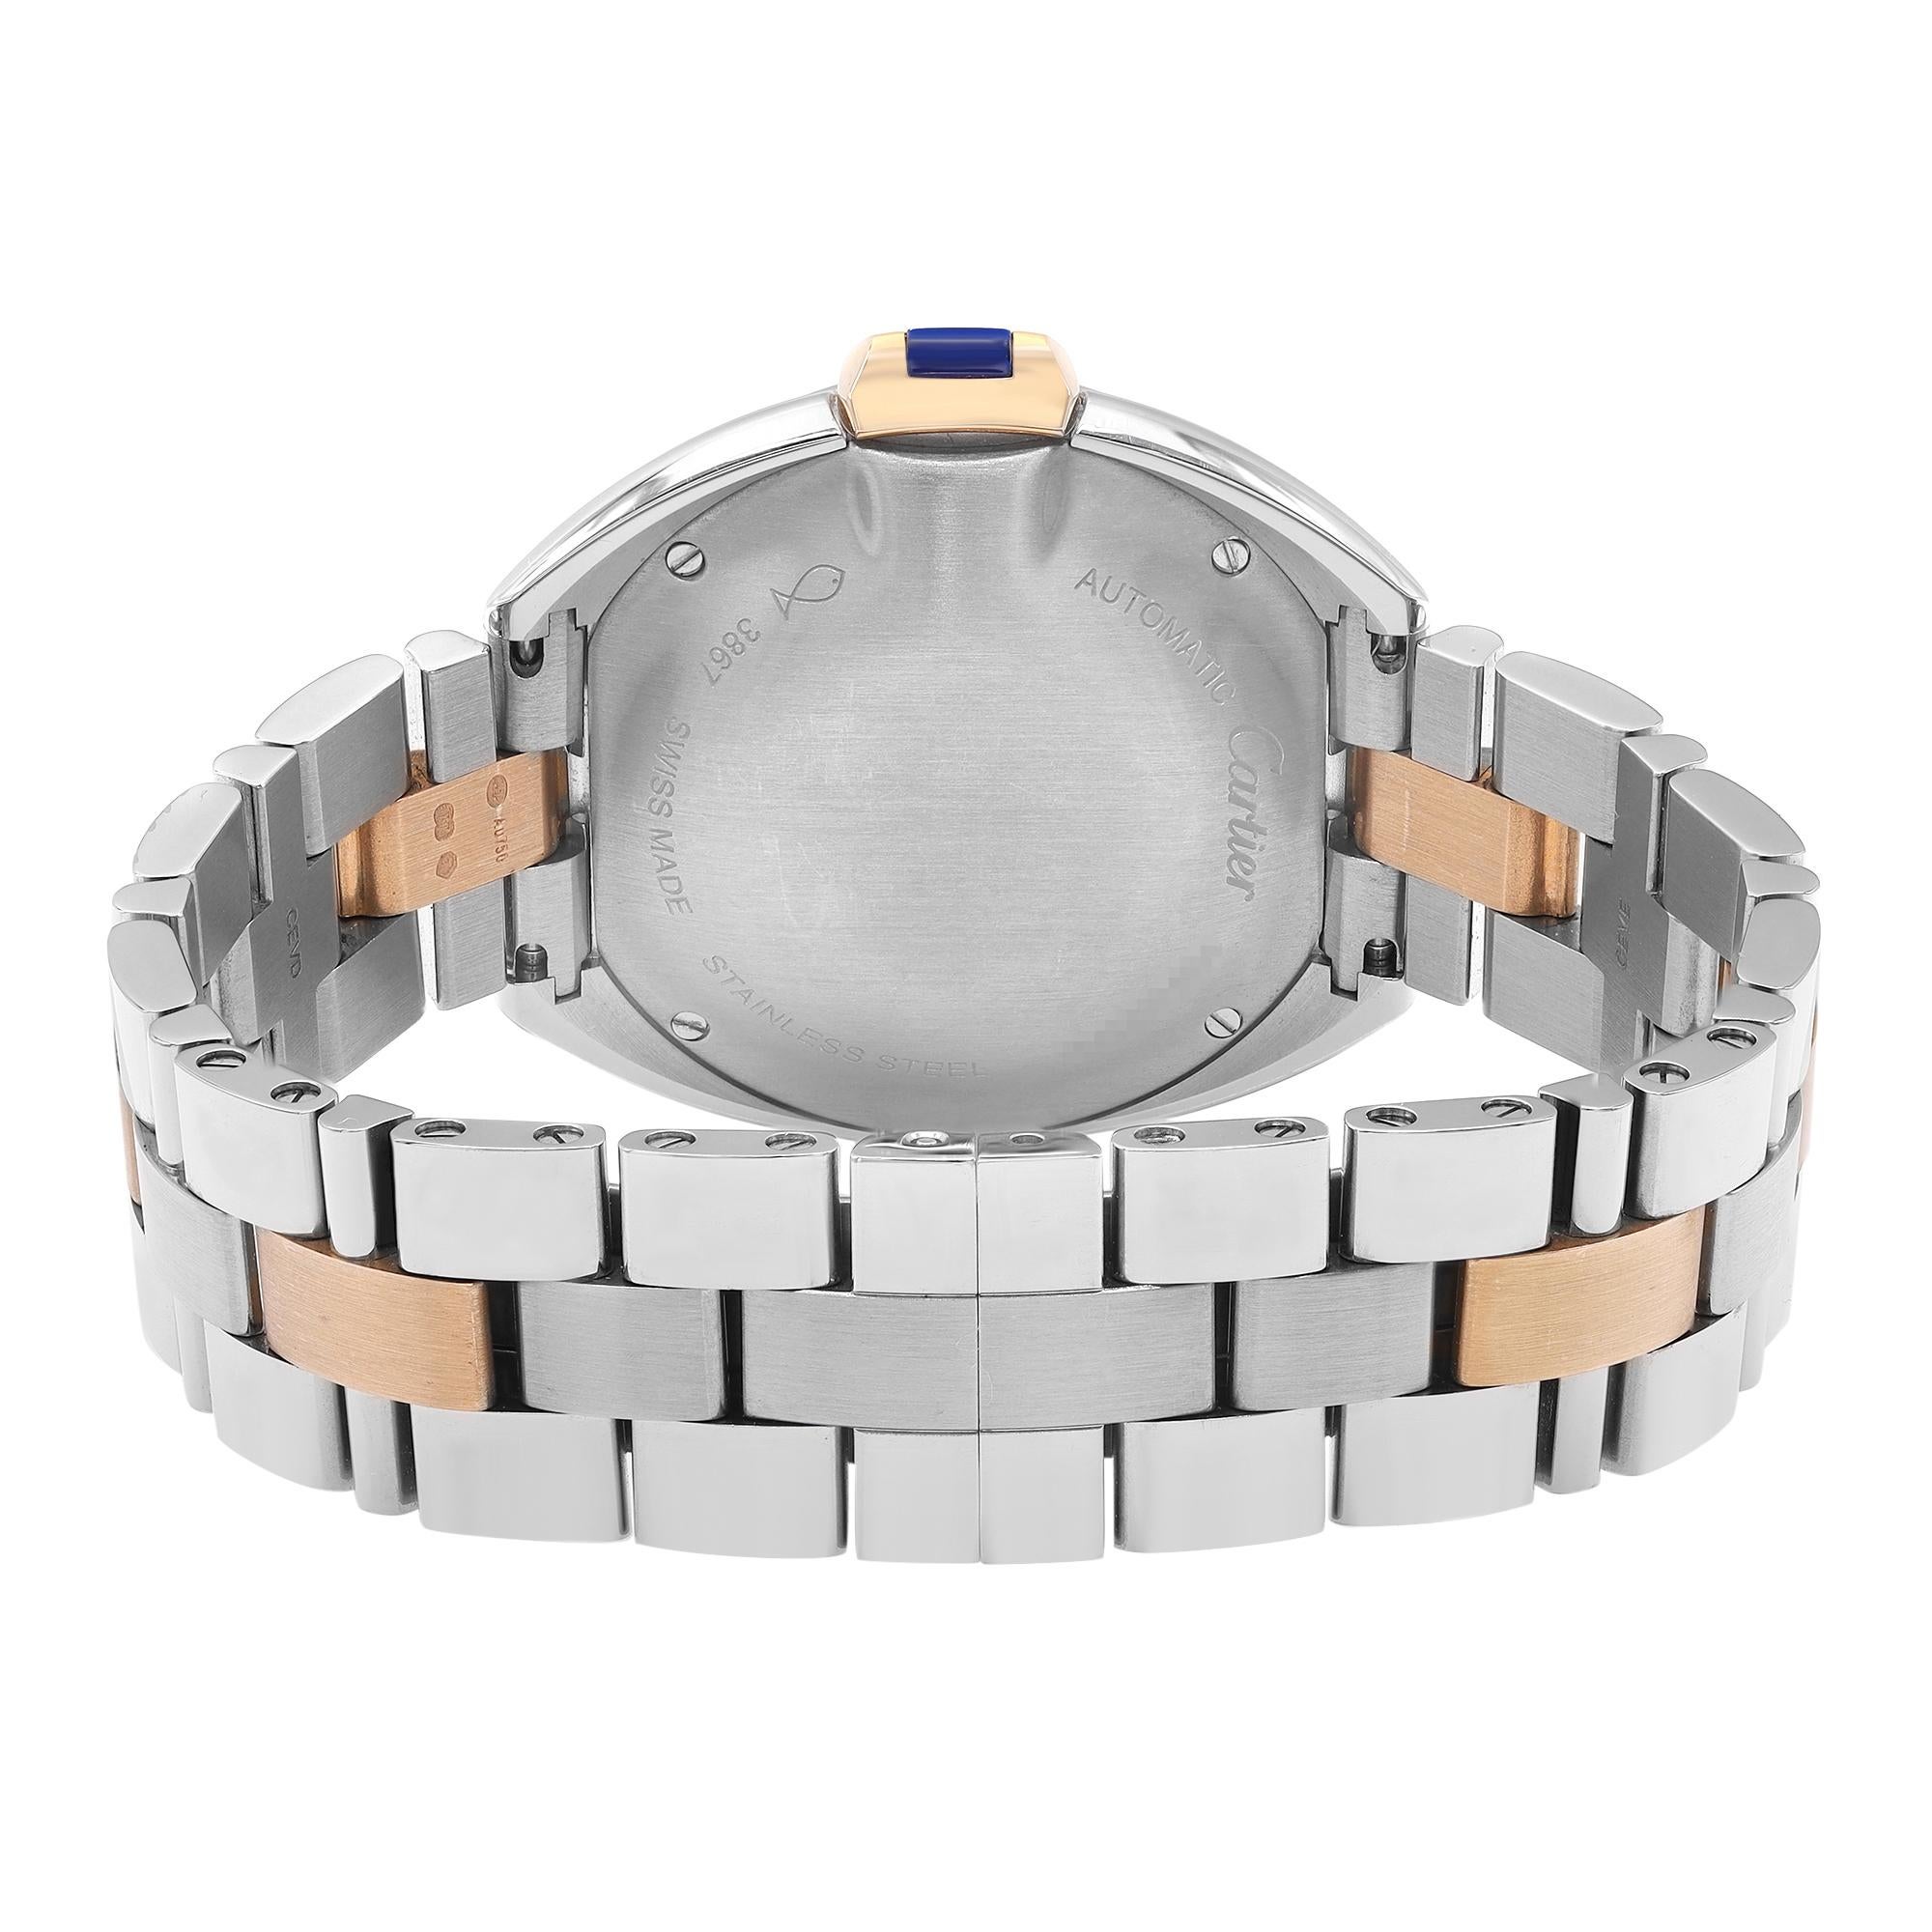 Cartier Cle De Steel 18k Gold Silver Dial Automatic Ladies Watch W2CL0004 1